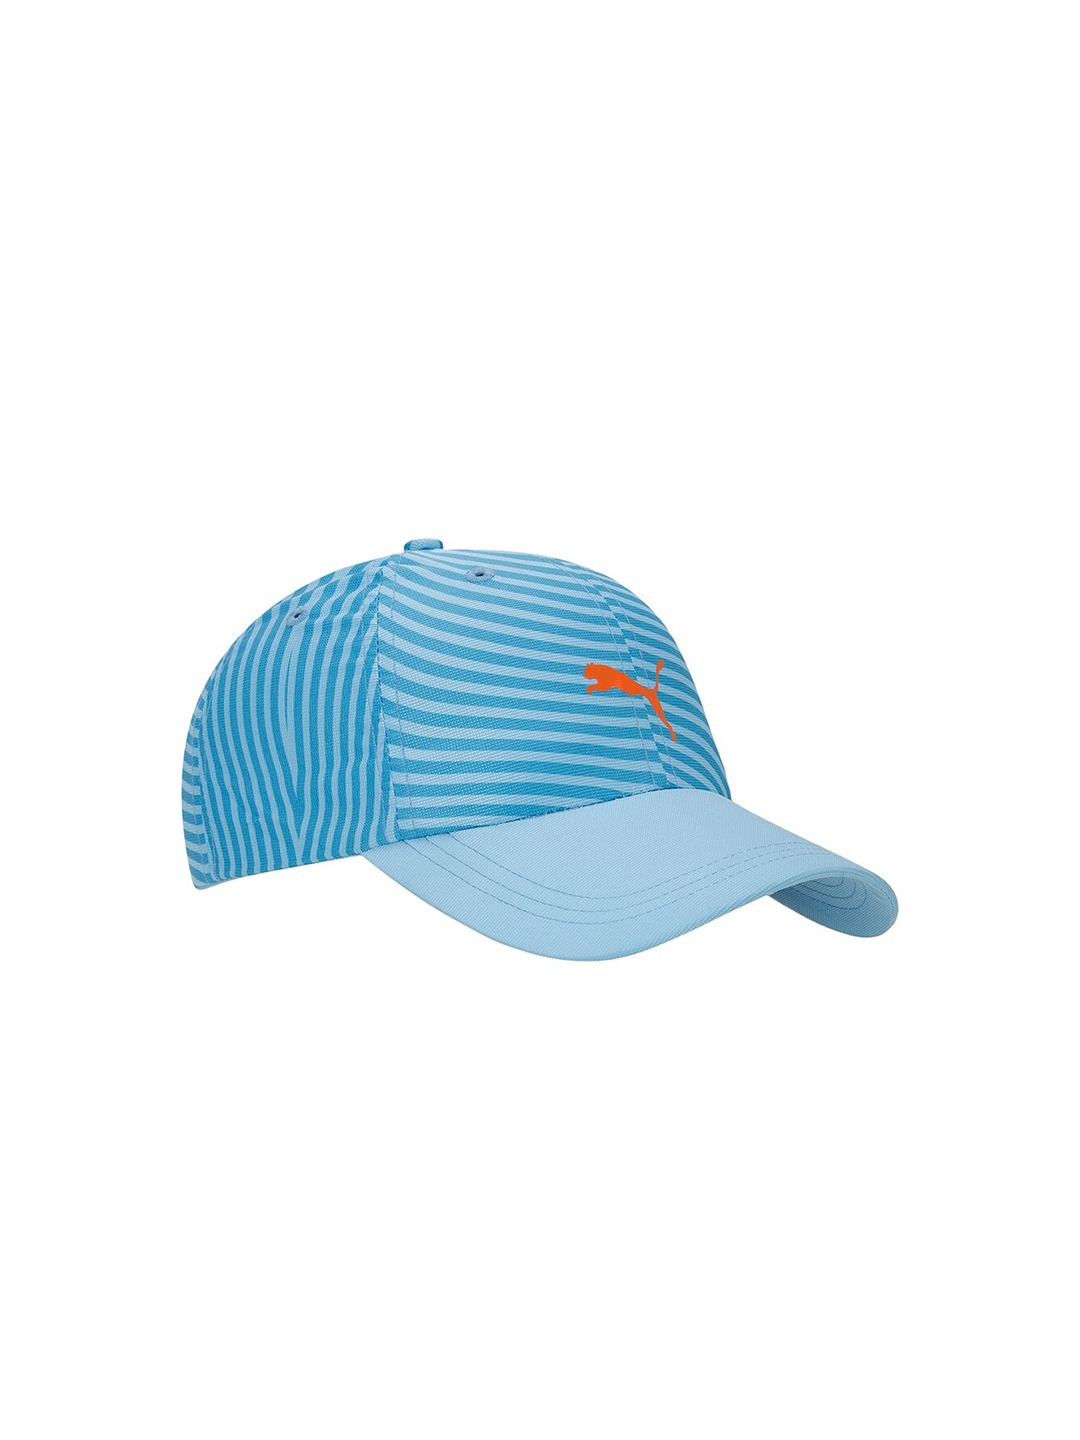 Accessories Caps | Puma Unisex Blue World Cup Cap - WW67516